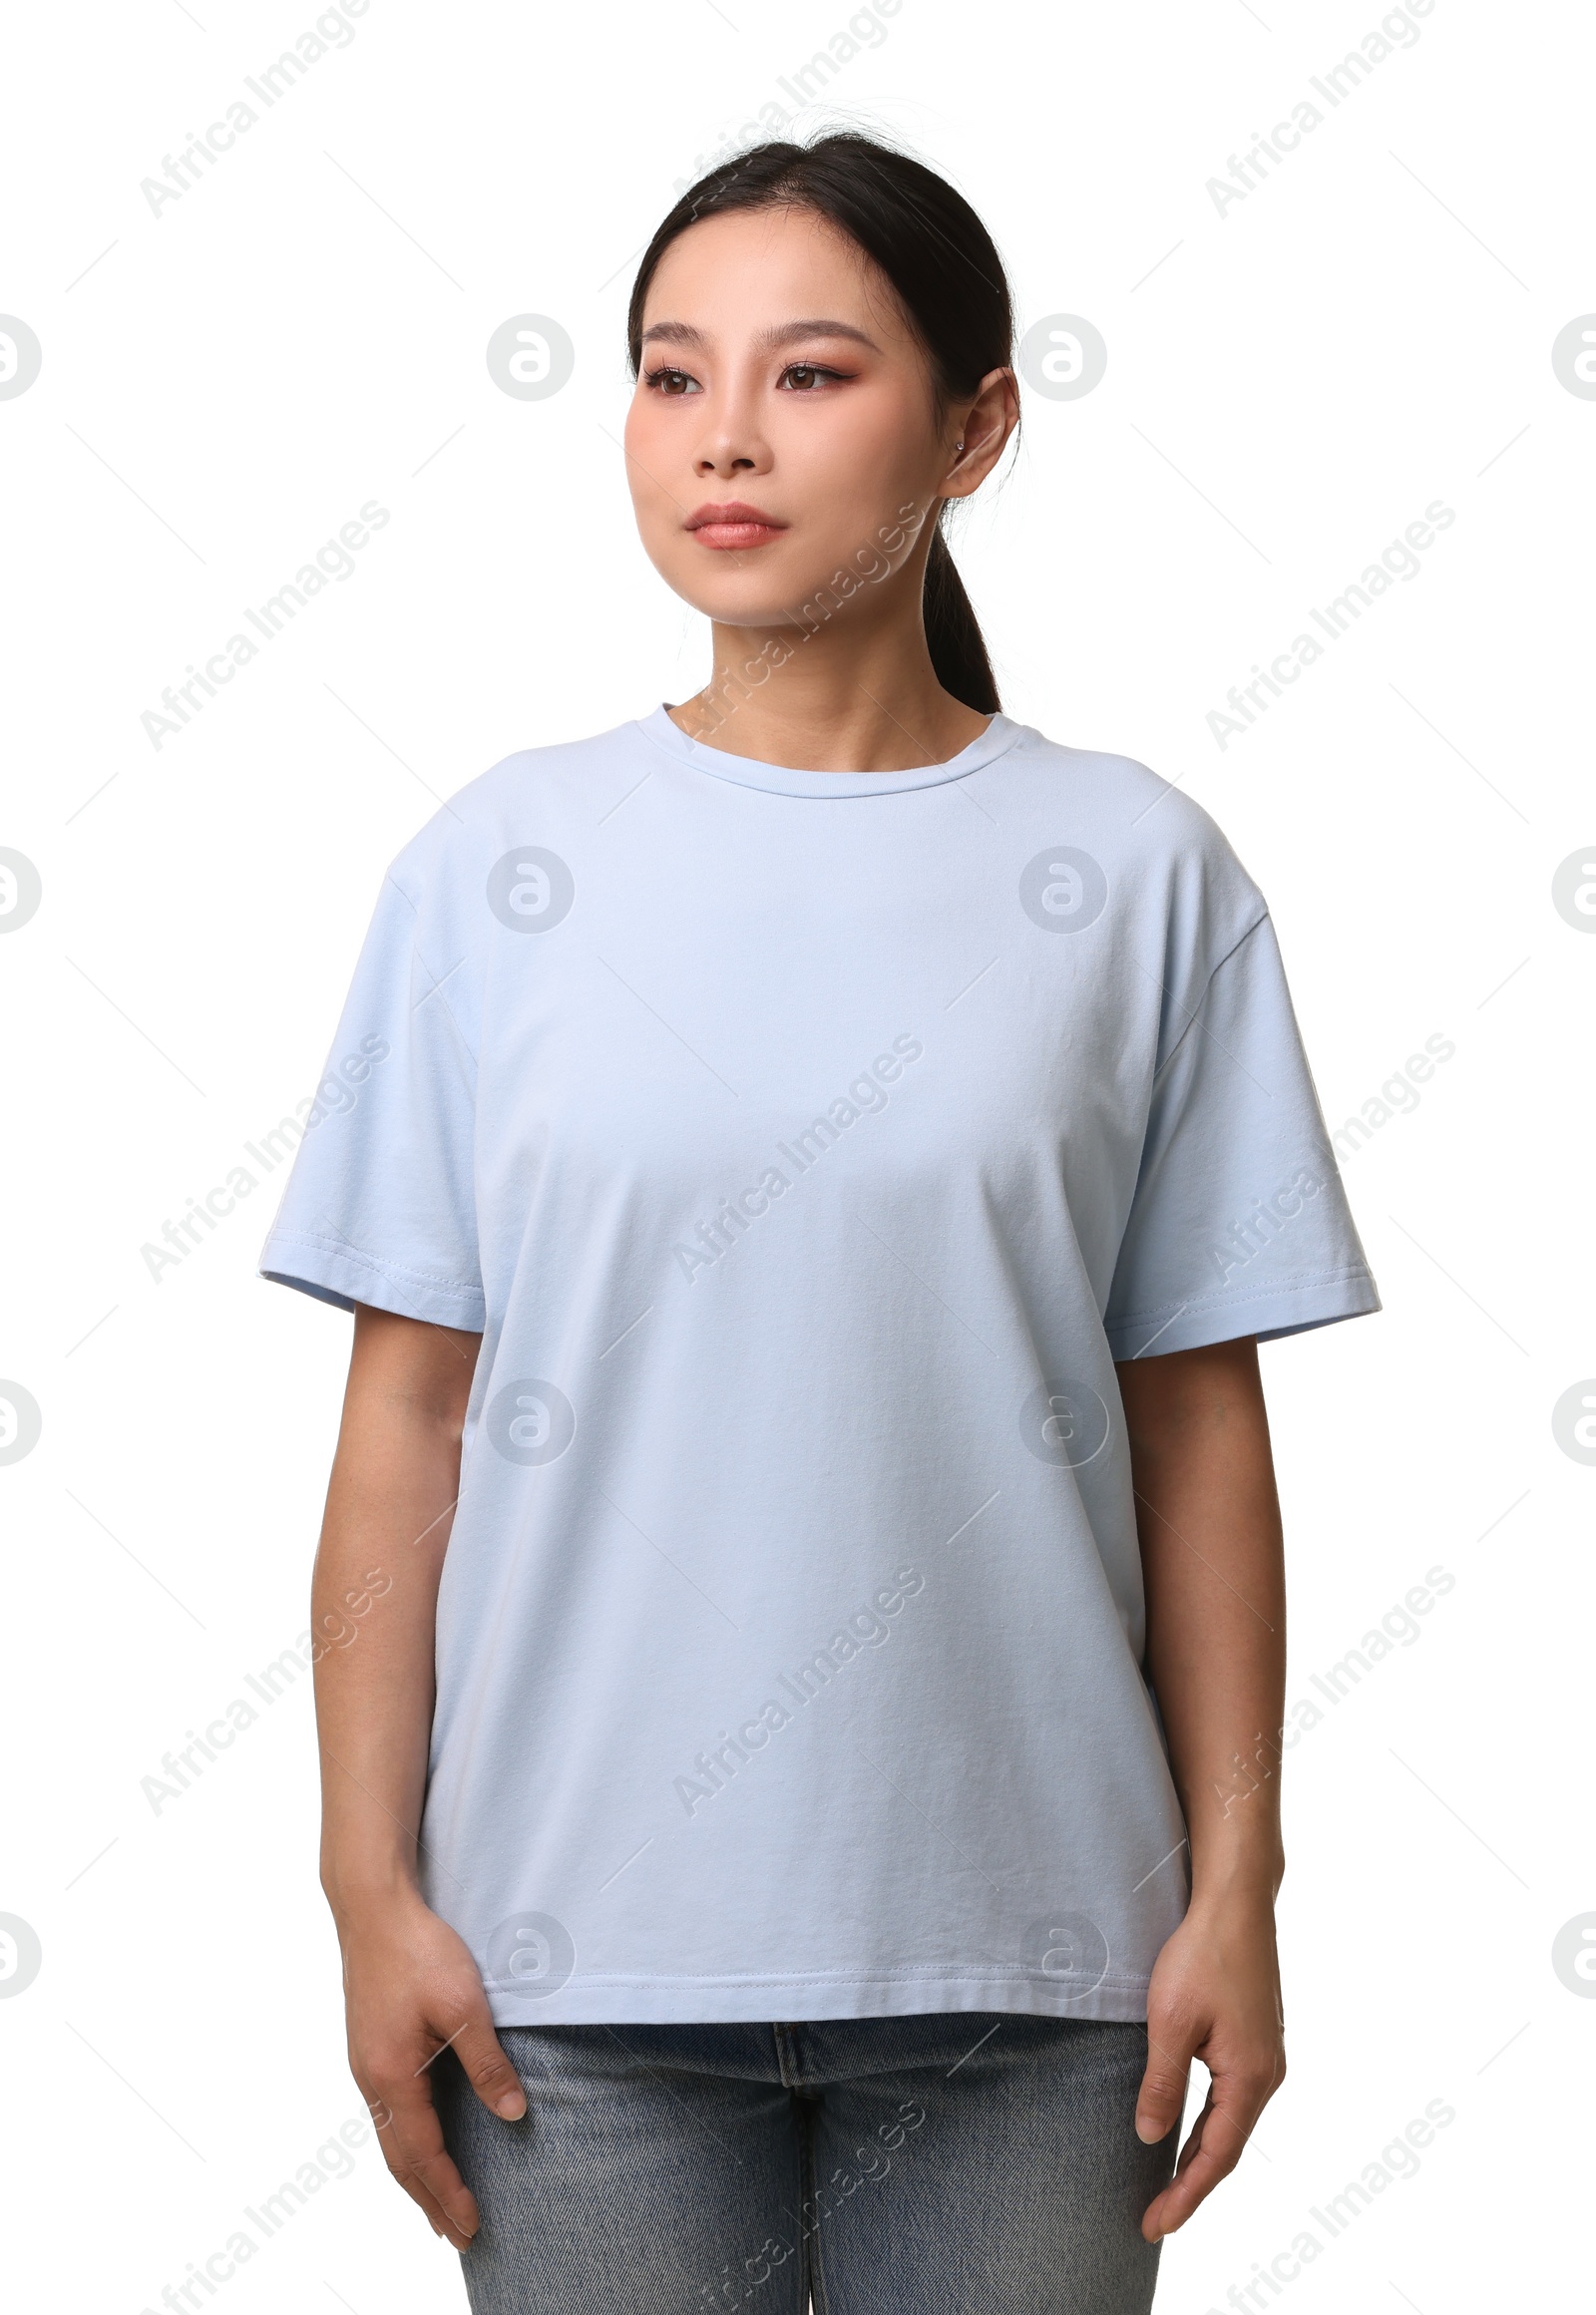 Photo of Woman wearing light blue t-shirt on white background